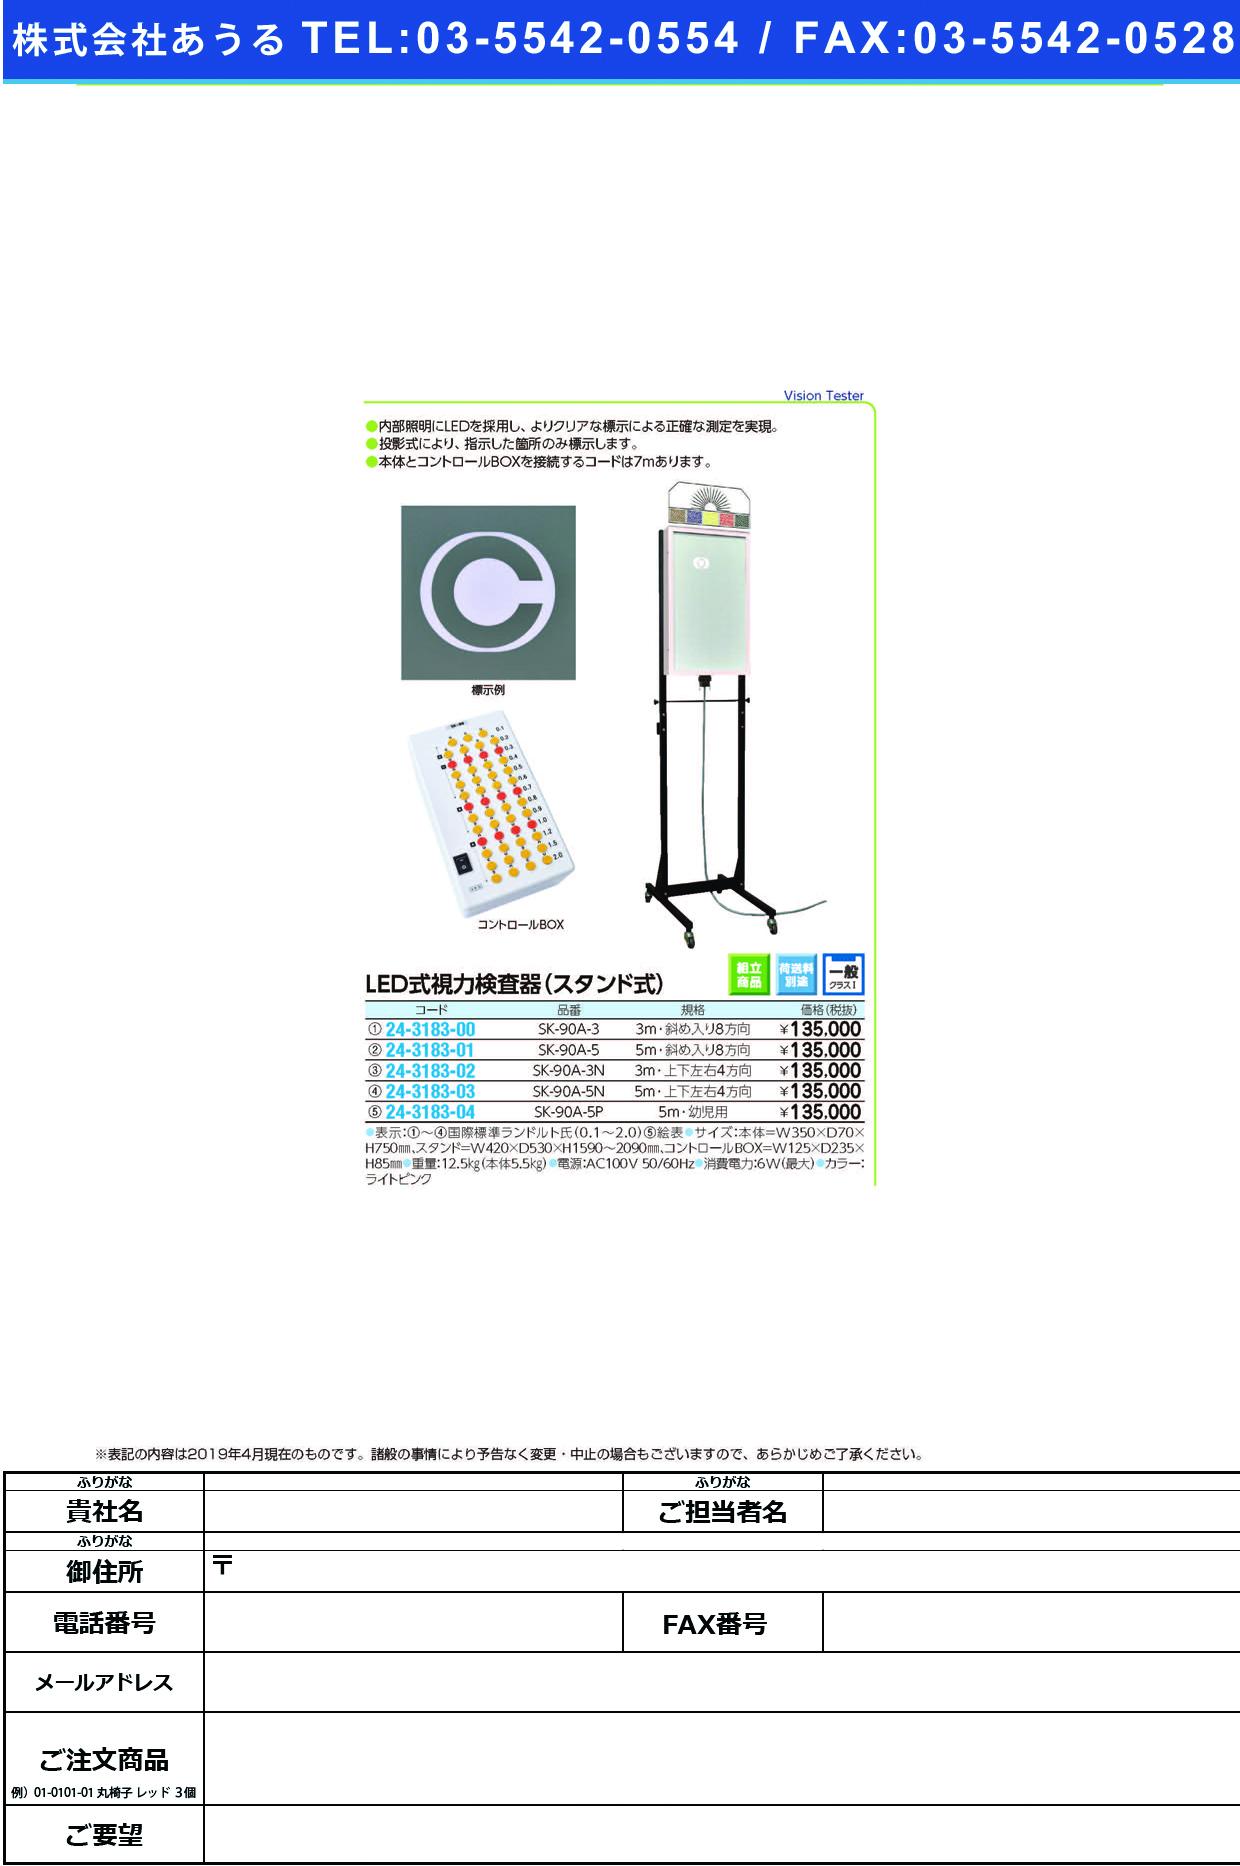 (24-3183-00)ＬＥＤ式視力検査器（スタンド式３ｍ用 SK-90A-3(8ﾎｳｺｳ) LEDｼｷｼﾘｮｸｹﾝｻｷｽﾀﾝﾄﾞｼｷ【1台単位】【2019年カタログ商品】